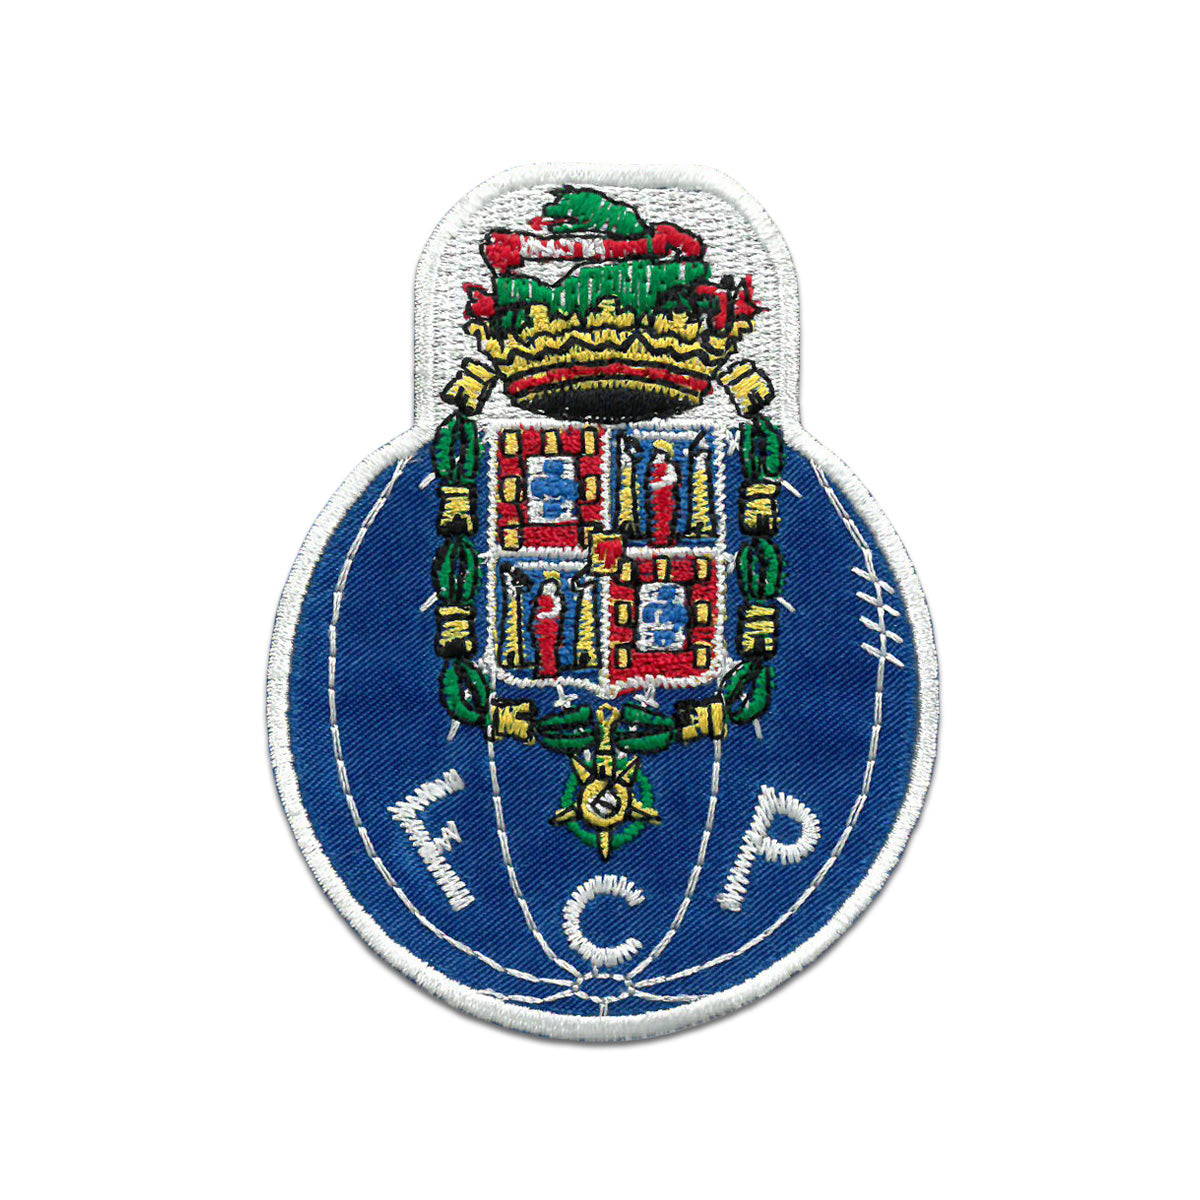 Futebol Clube do Porto